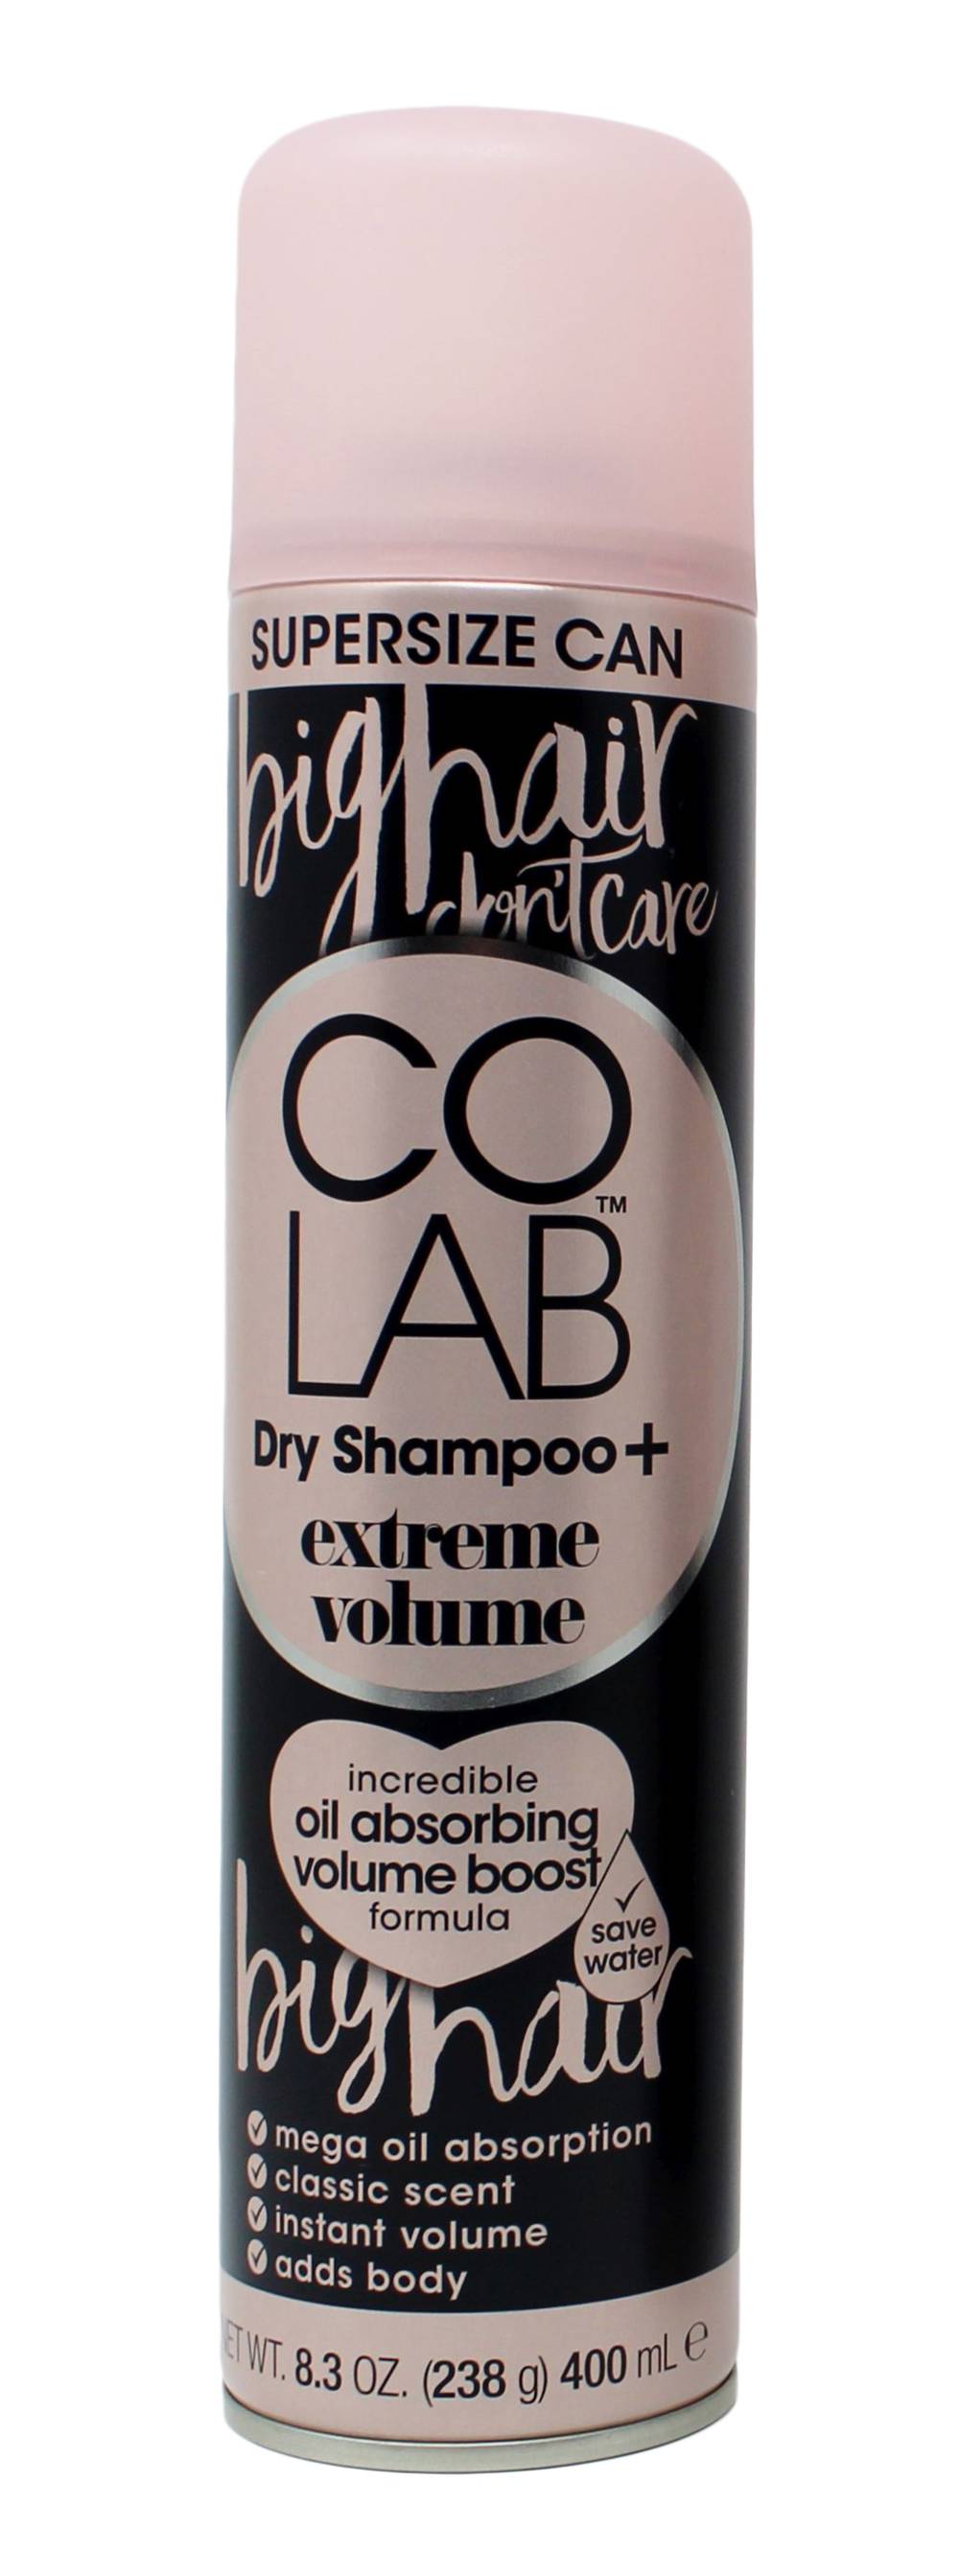 COLAB Extreme Volume Dry Shampoo + Extreme Volume - 8.3 oz